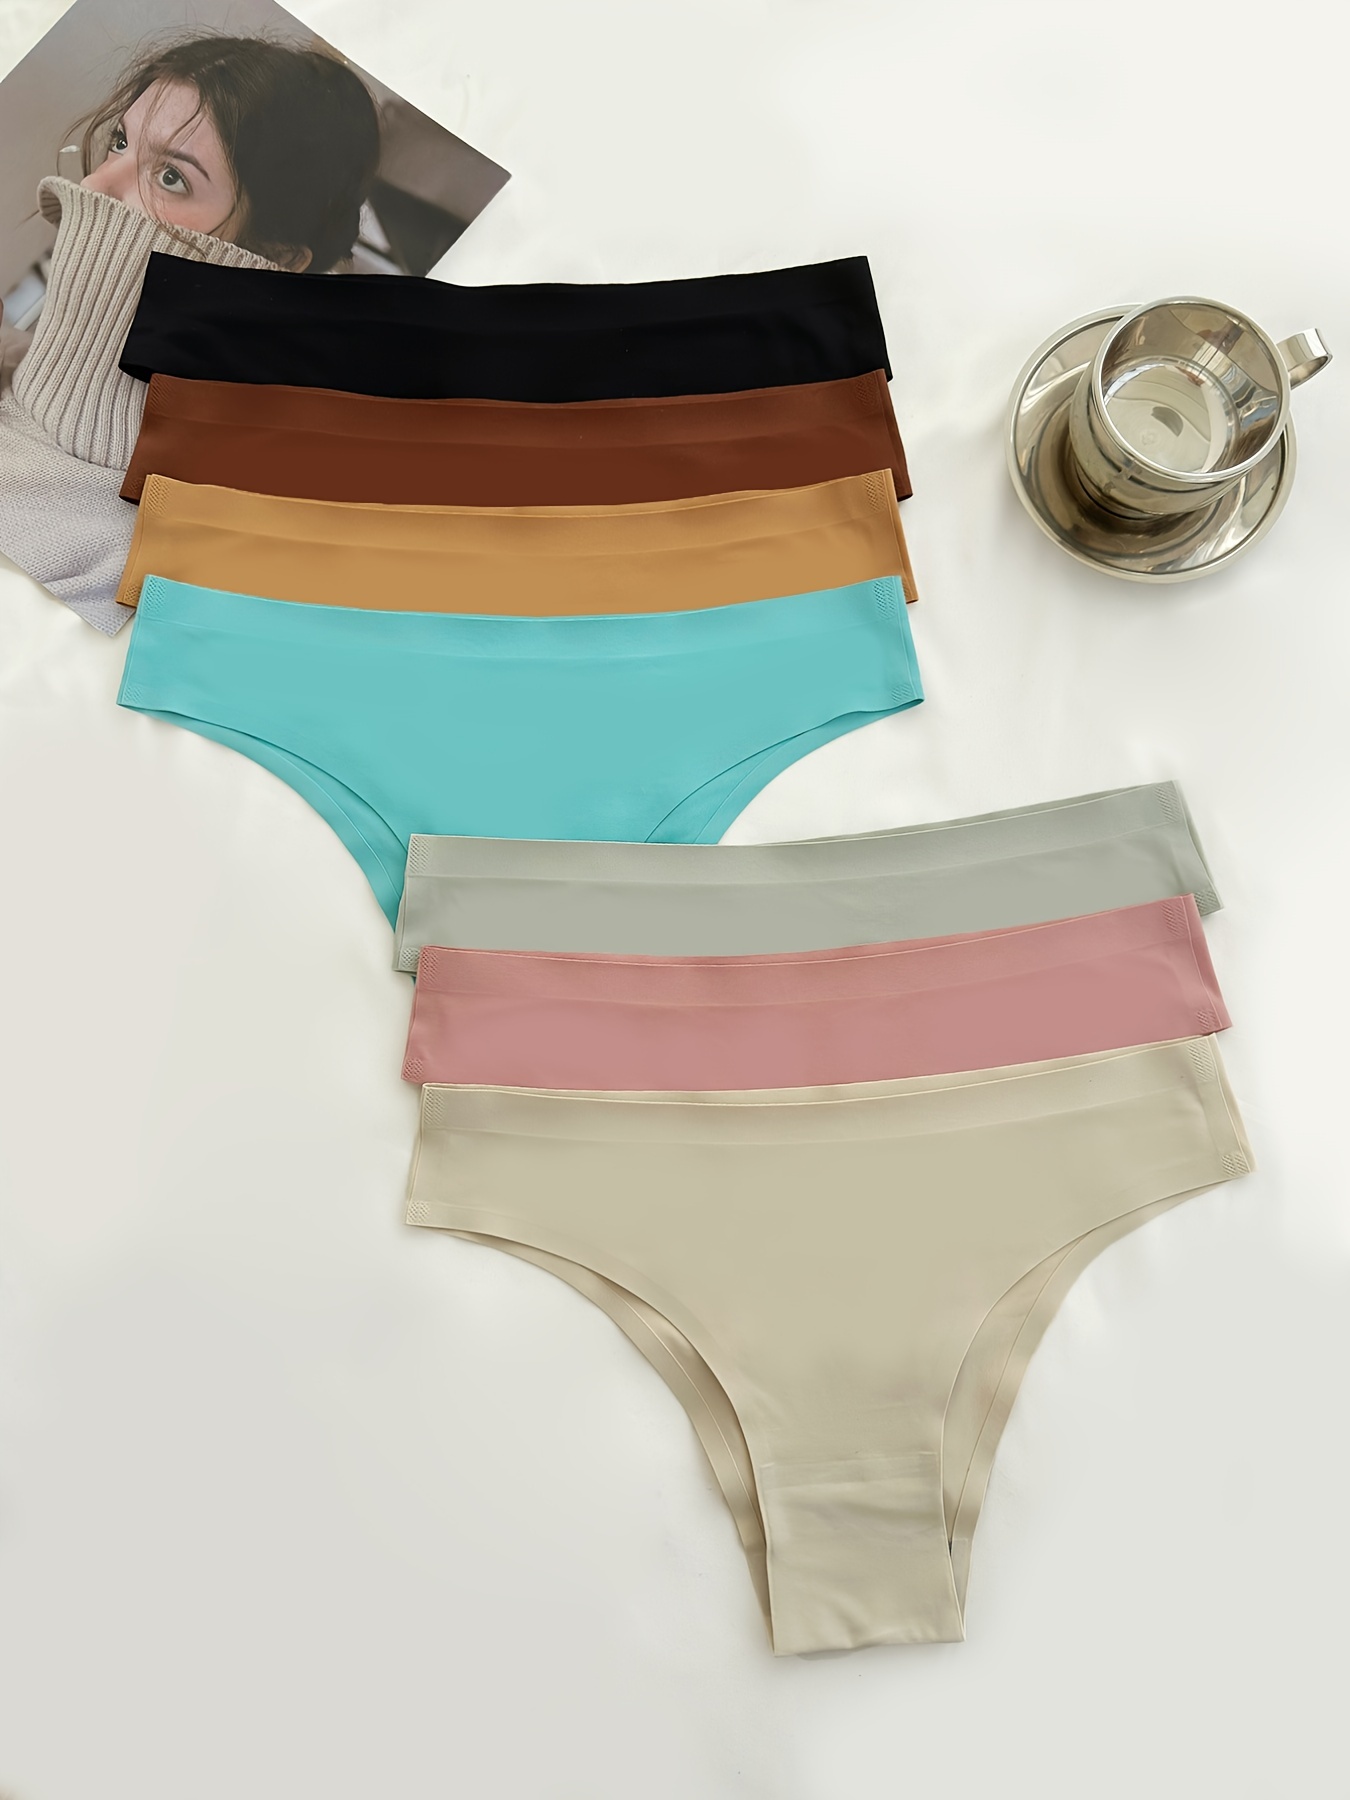 6 Pack Cute Bikini Panties, Mixed Color Bikini Style Cotton Panties,  Women's Lingerie & Underwear